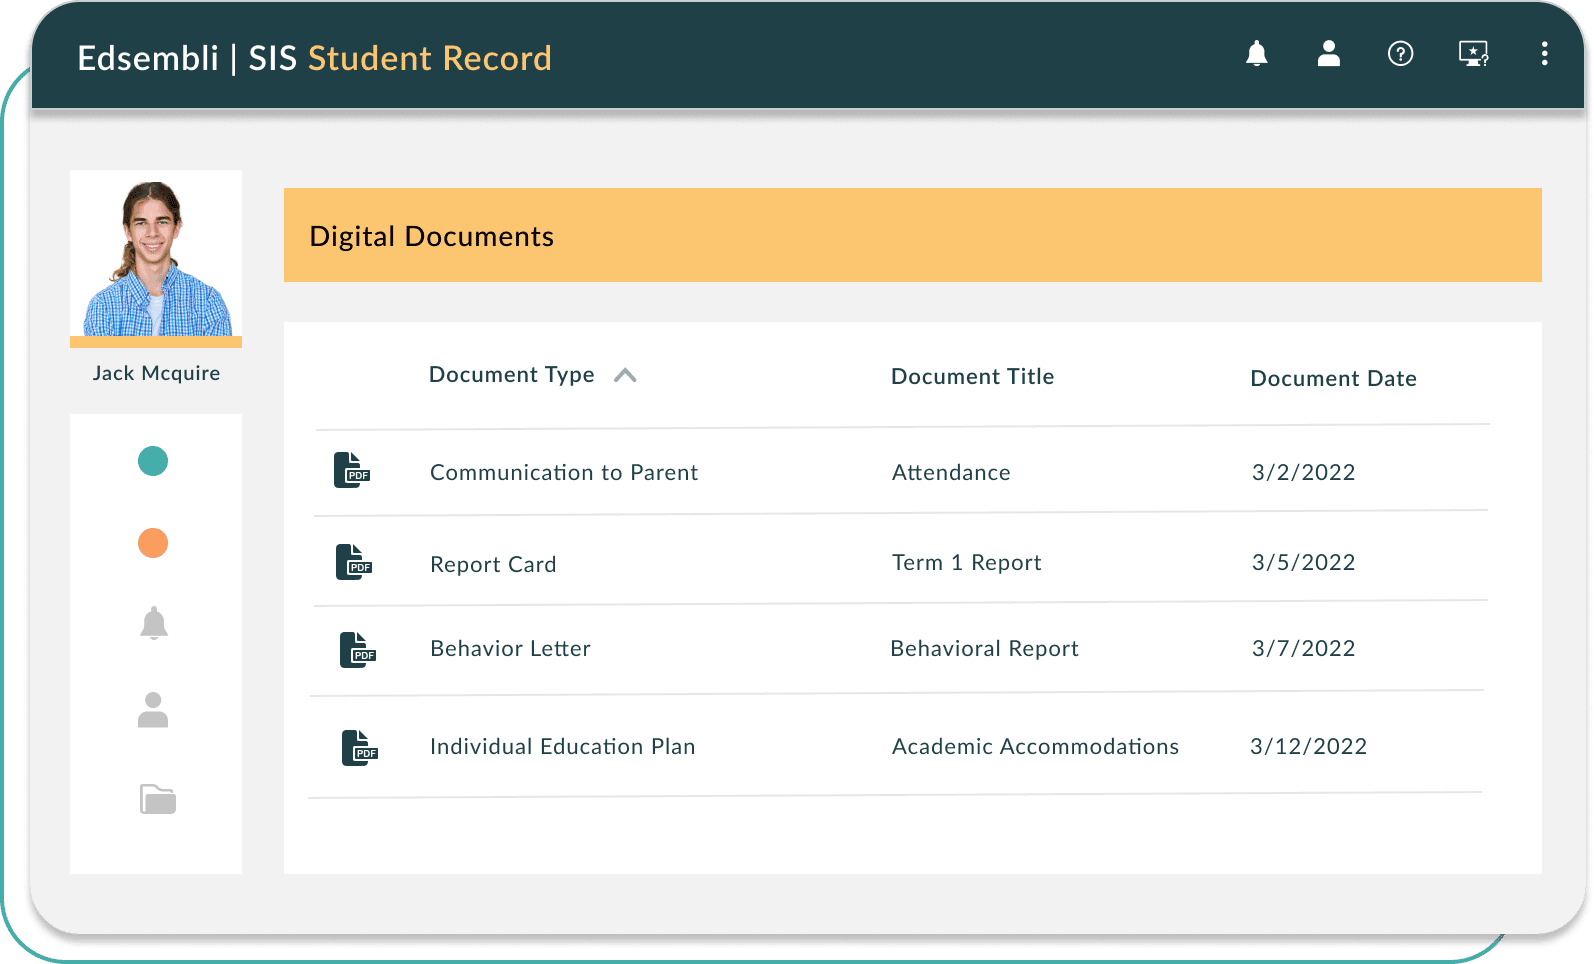 Dashboard of Edsembli | SIS Student Record Digital Documents screen